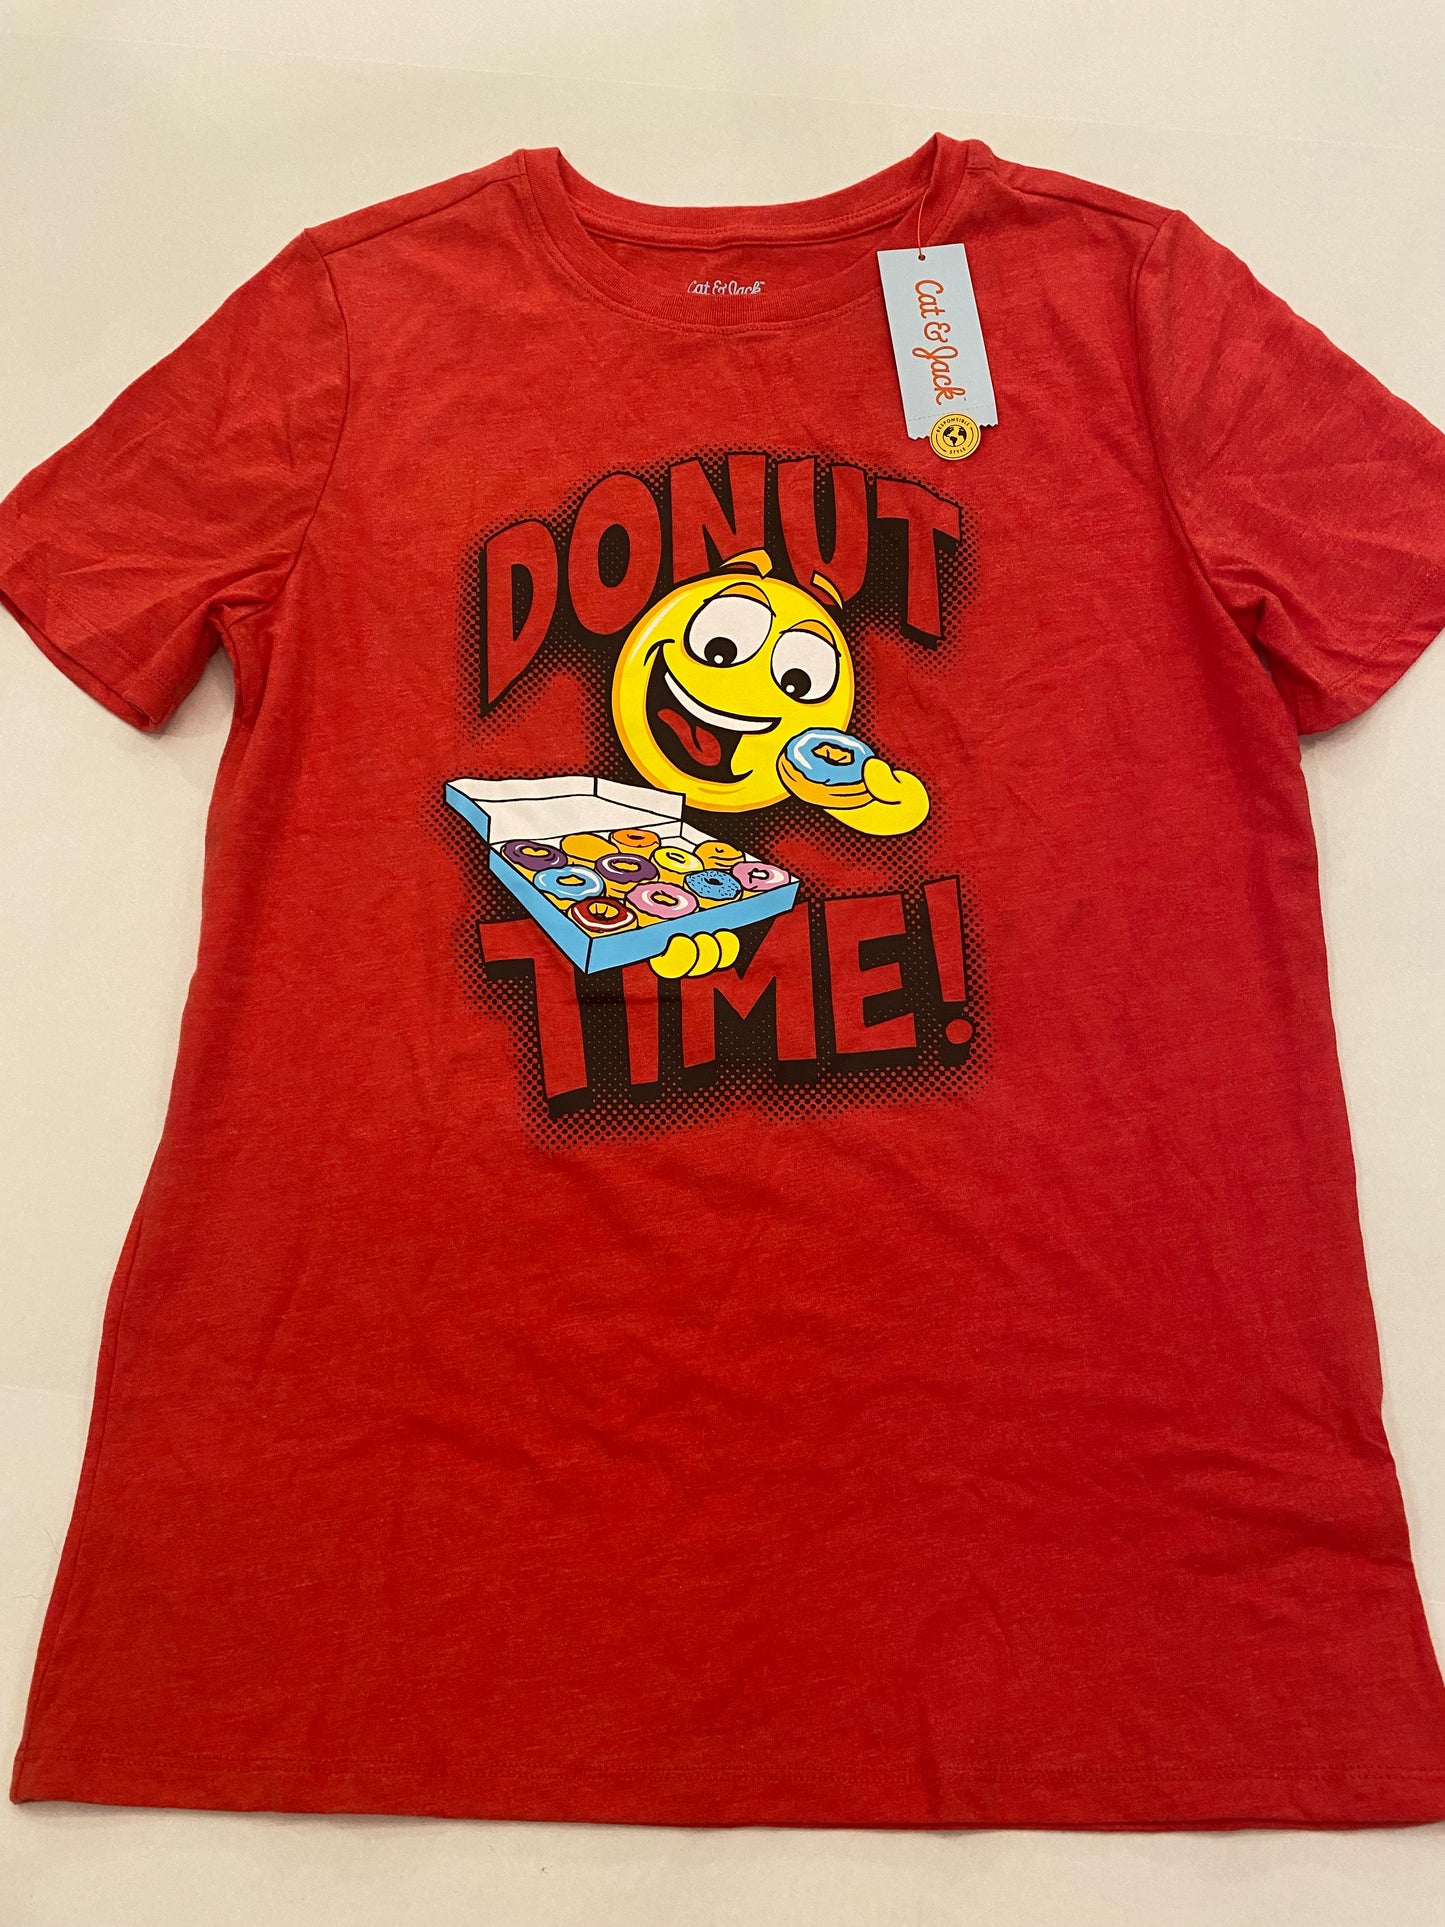 Boys XXL/18 NWT Cat & Jack Donut shirt